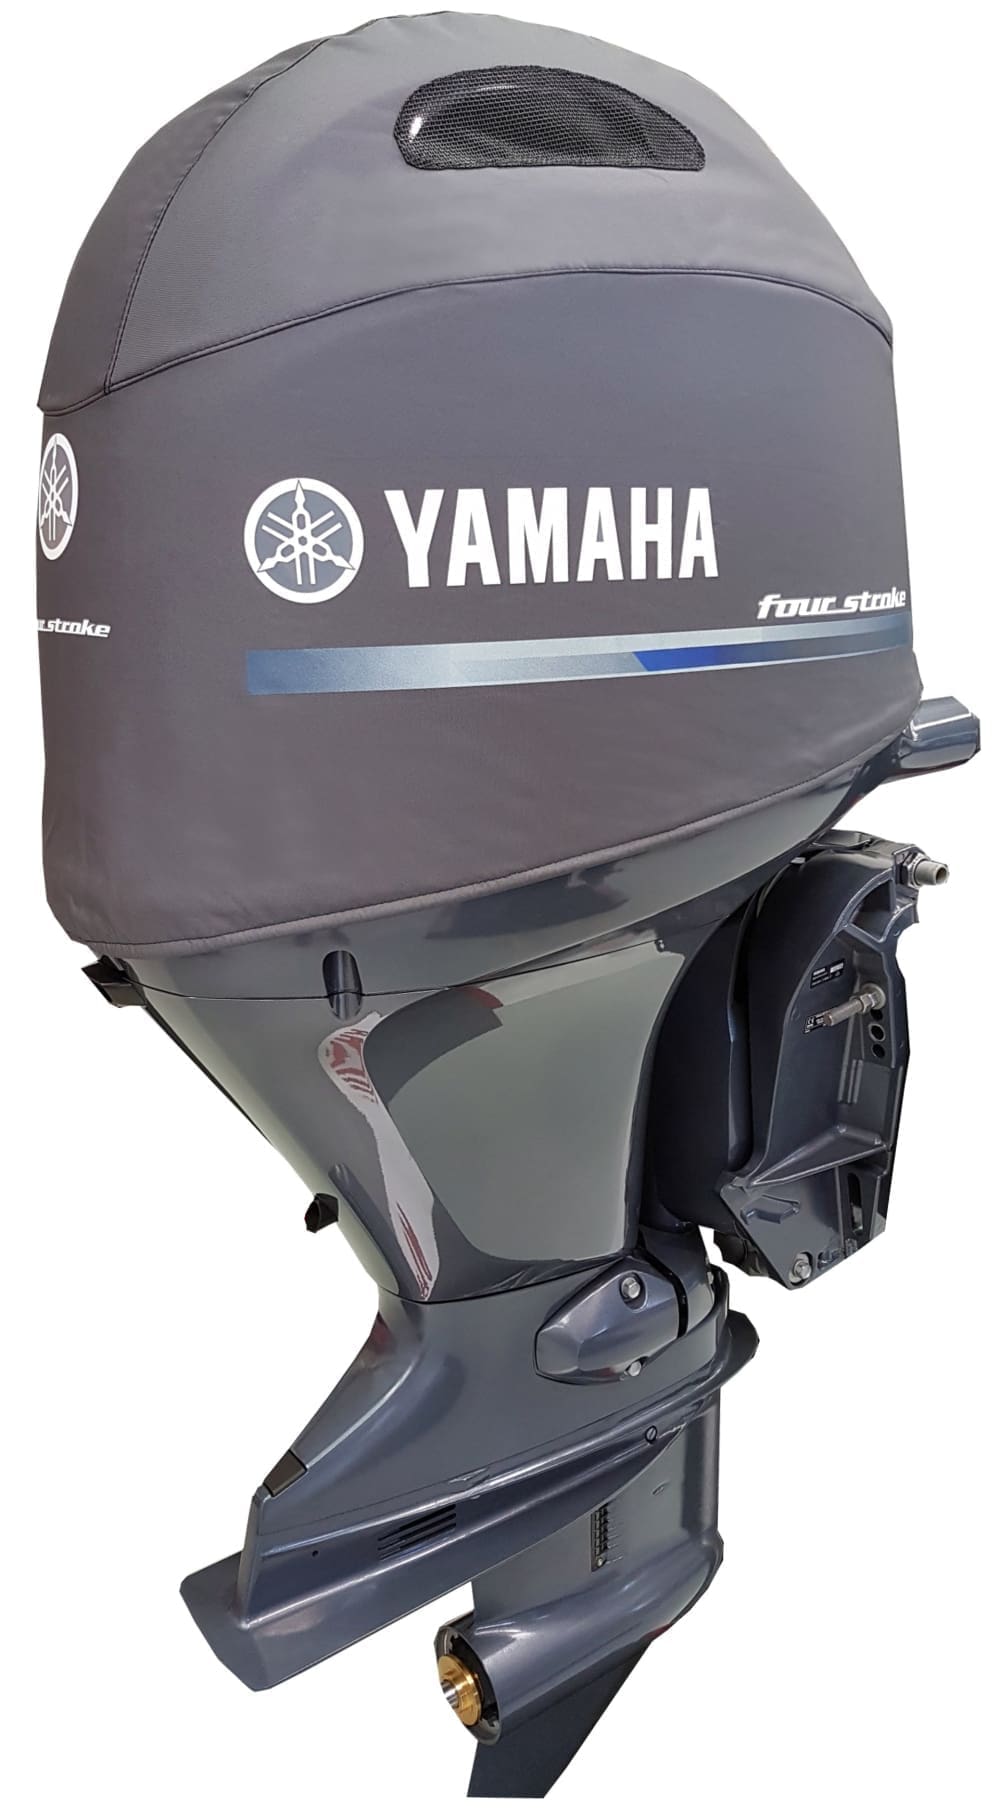 Yamaha F60 FETL Yamaha F50 HETL Outboard Motors Cowling Protect Vented Cover